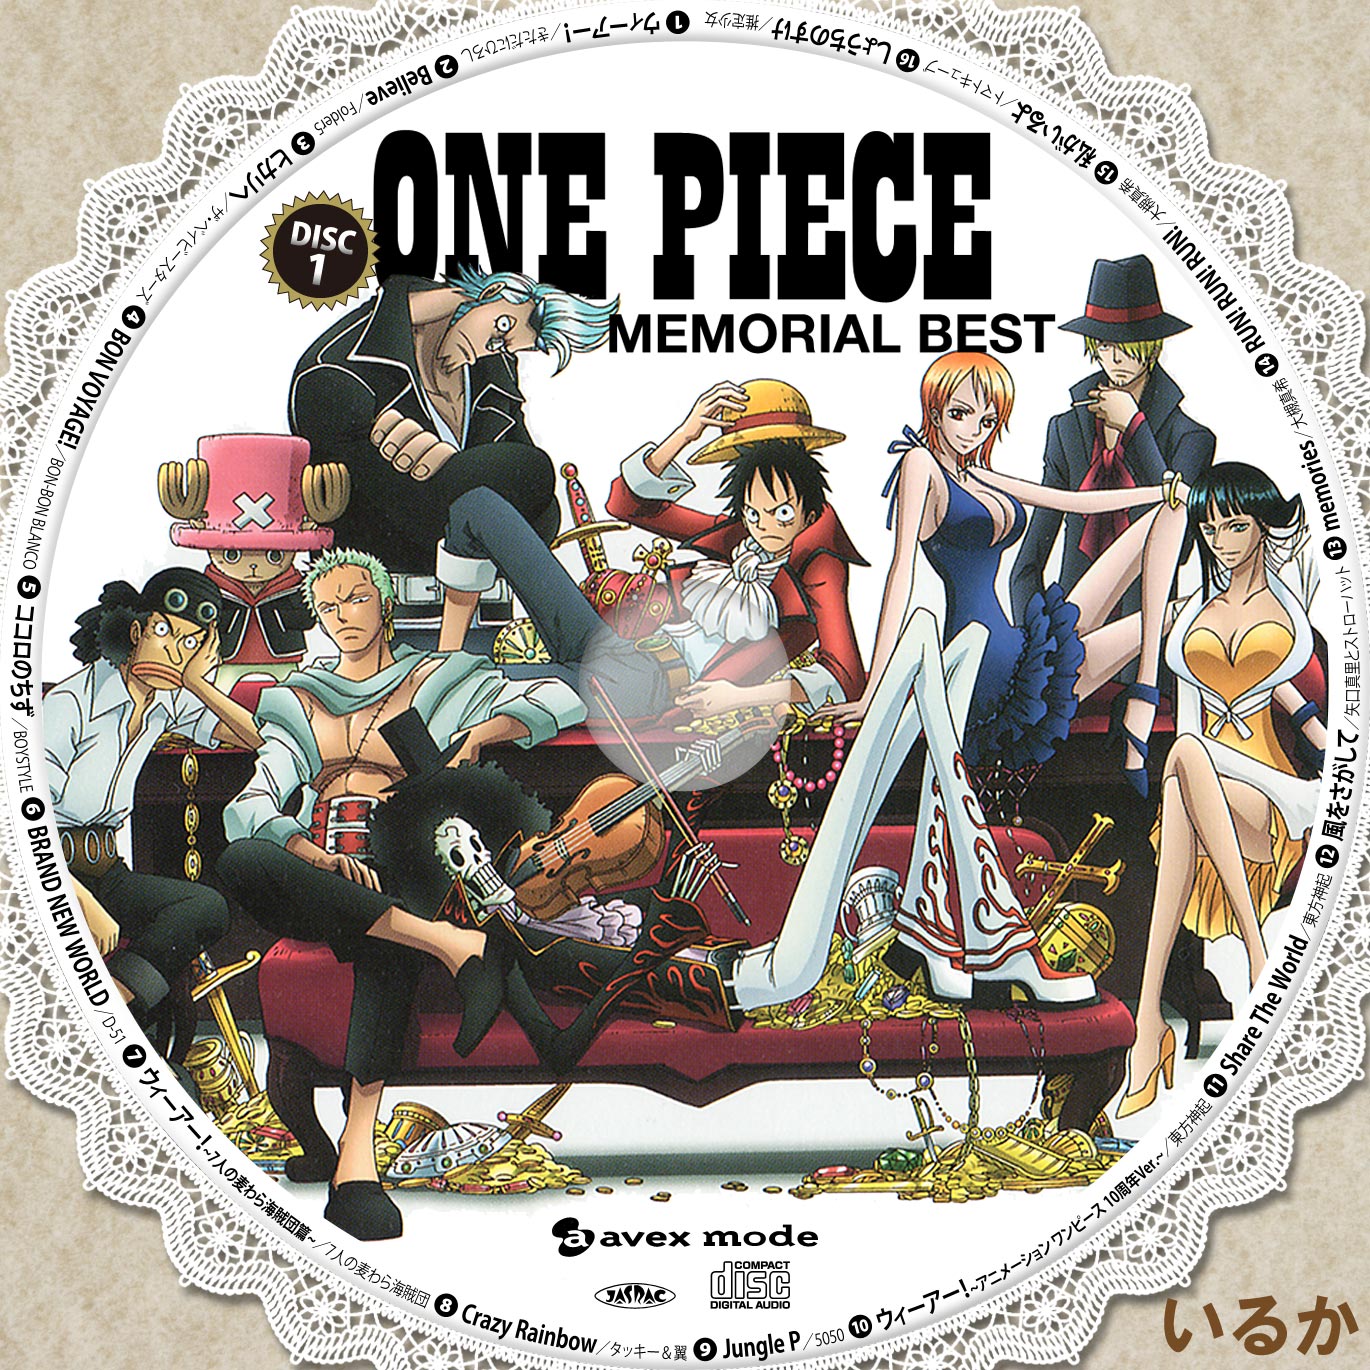 One Piece Memorial Best いるか屋の自作cd Dvdラベル工房